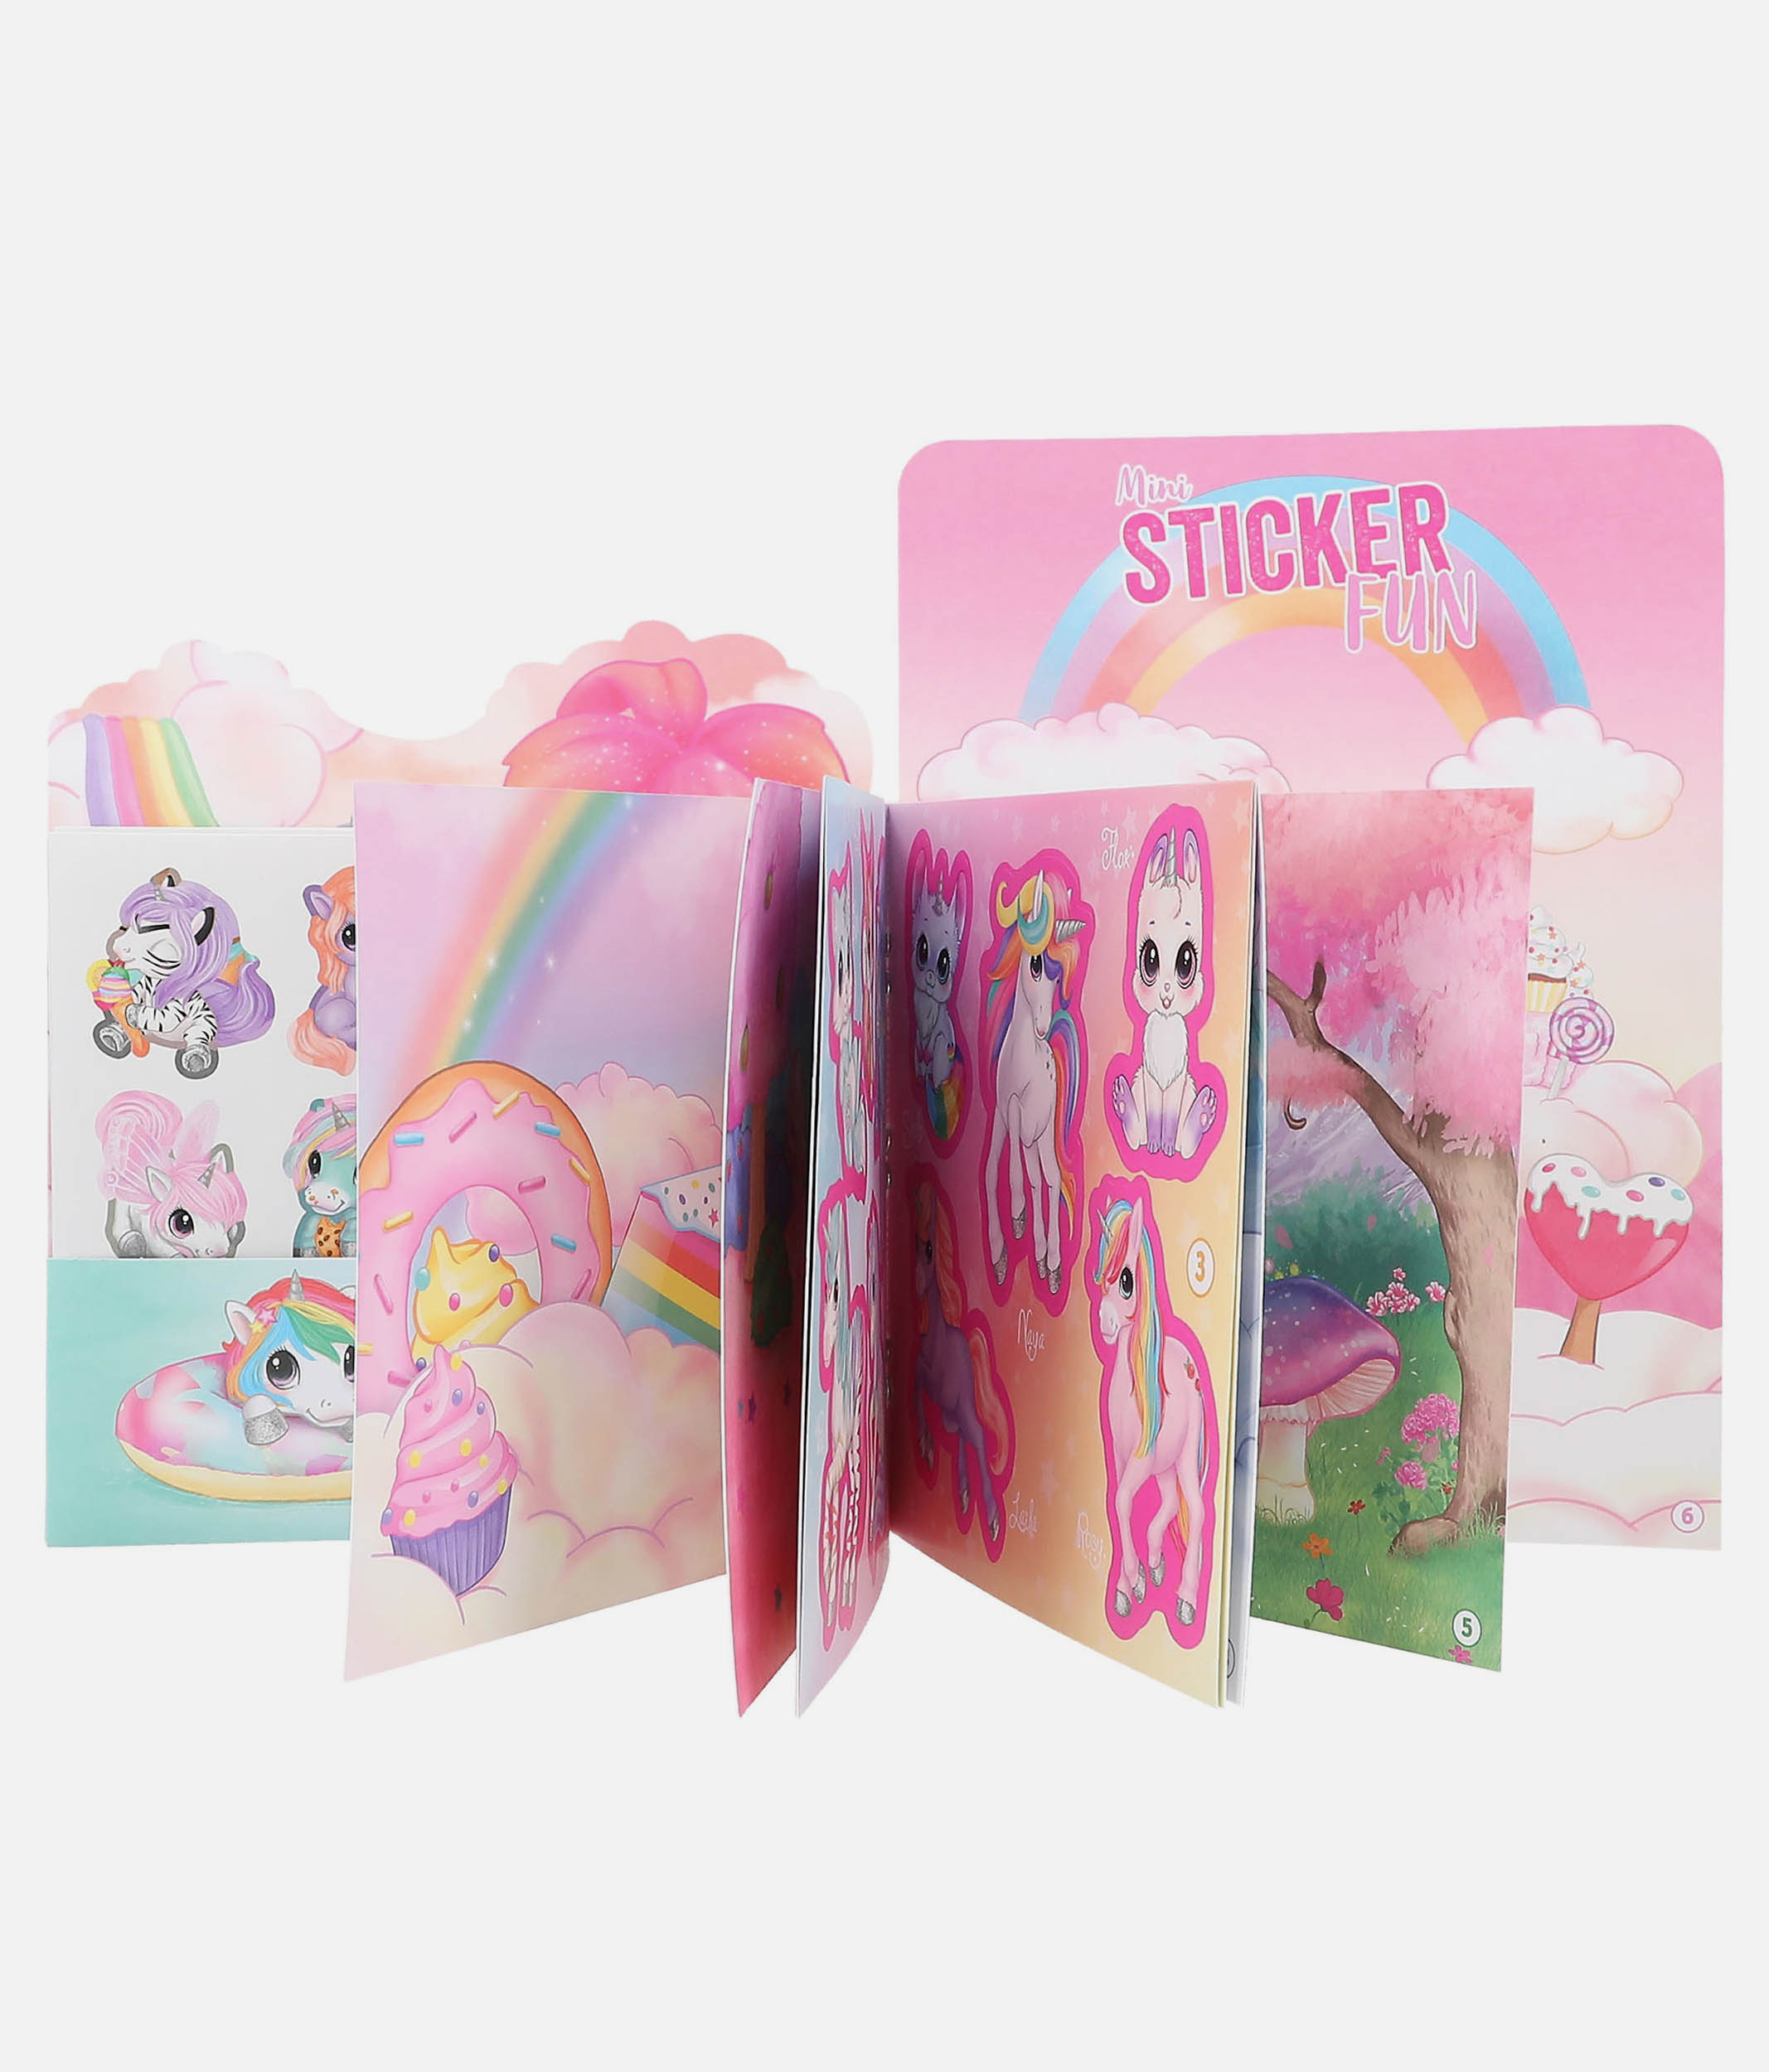 Ylvi Unicorn Mini Sticker-Fun Book - 0012466